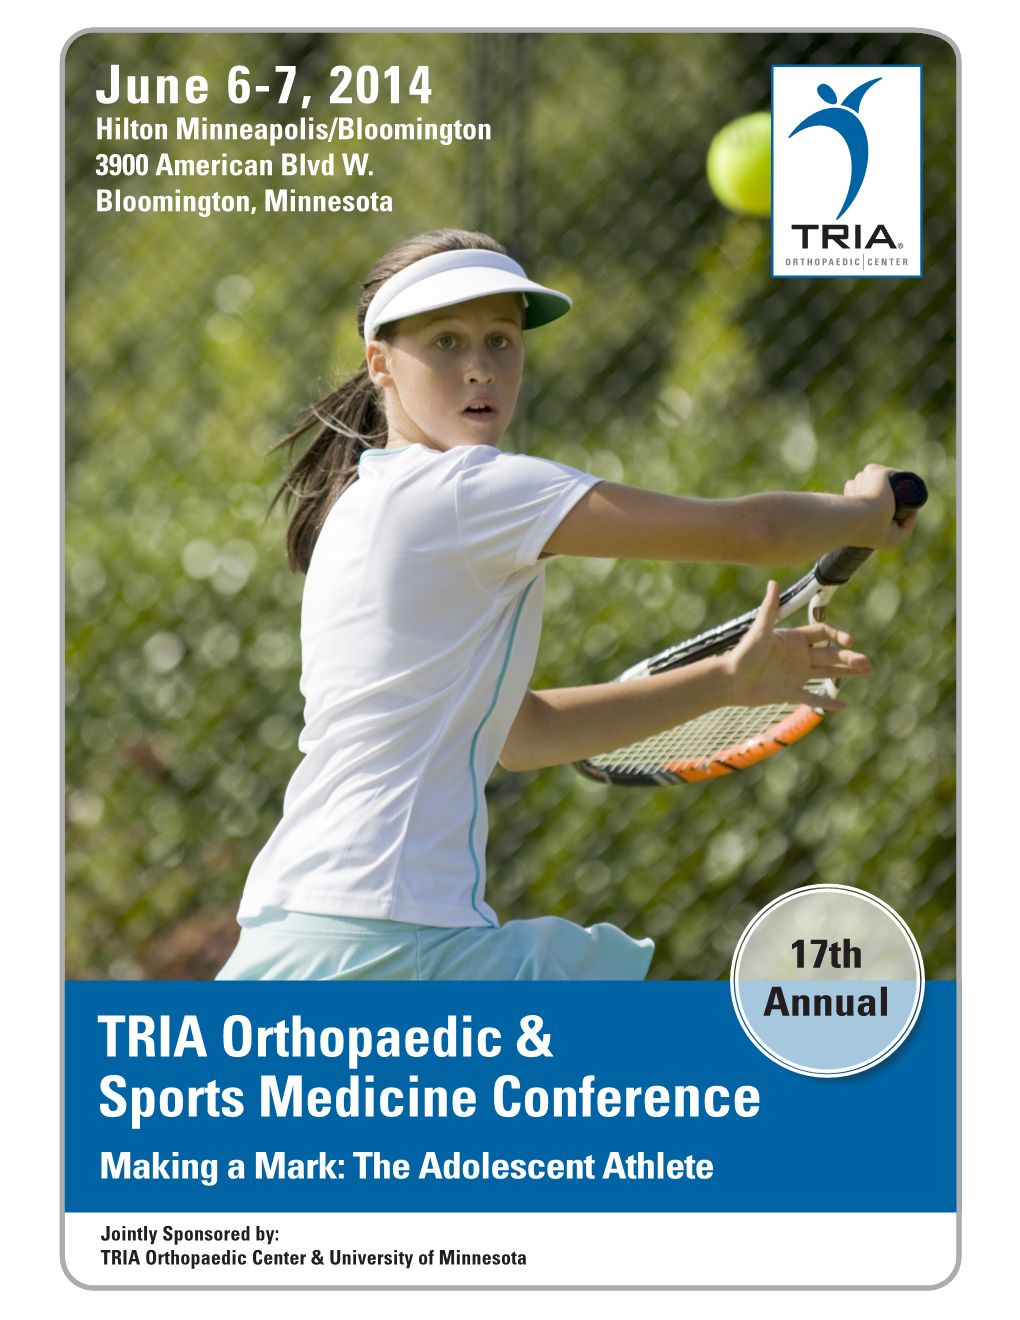 TRIA Orthopaedic & Sports Medicine Conference